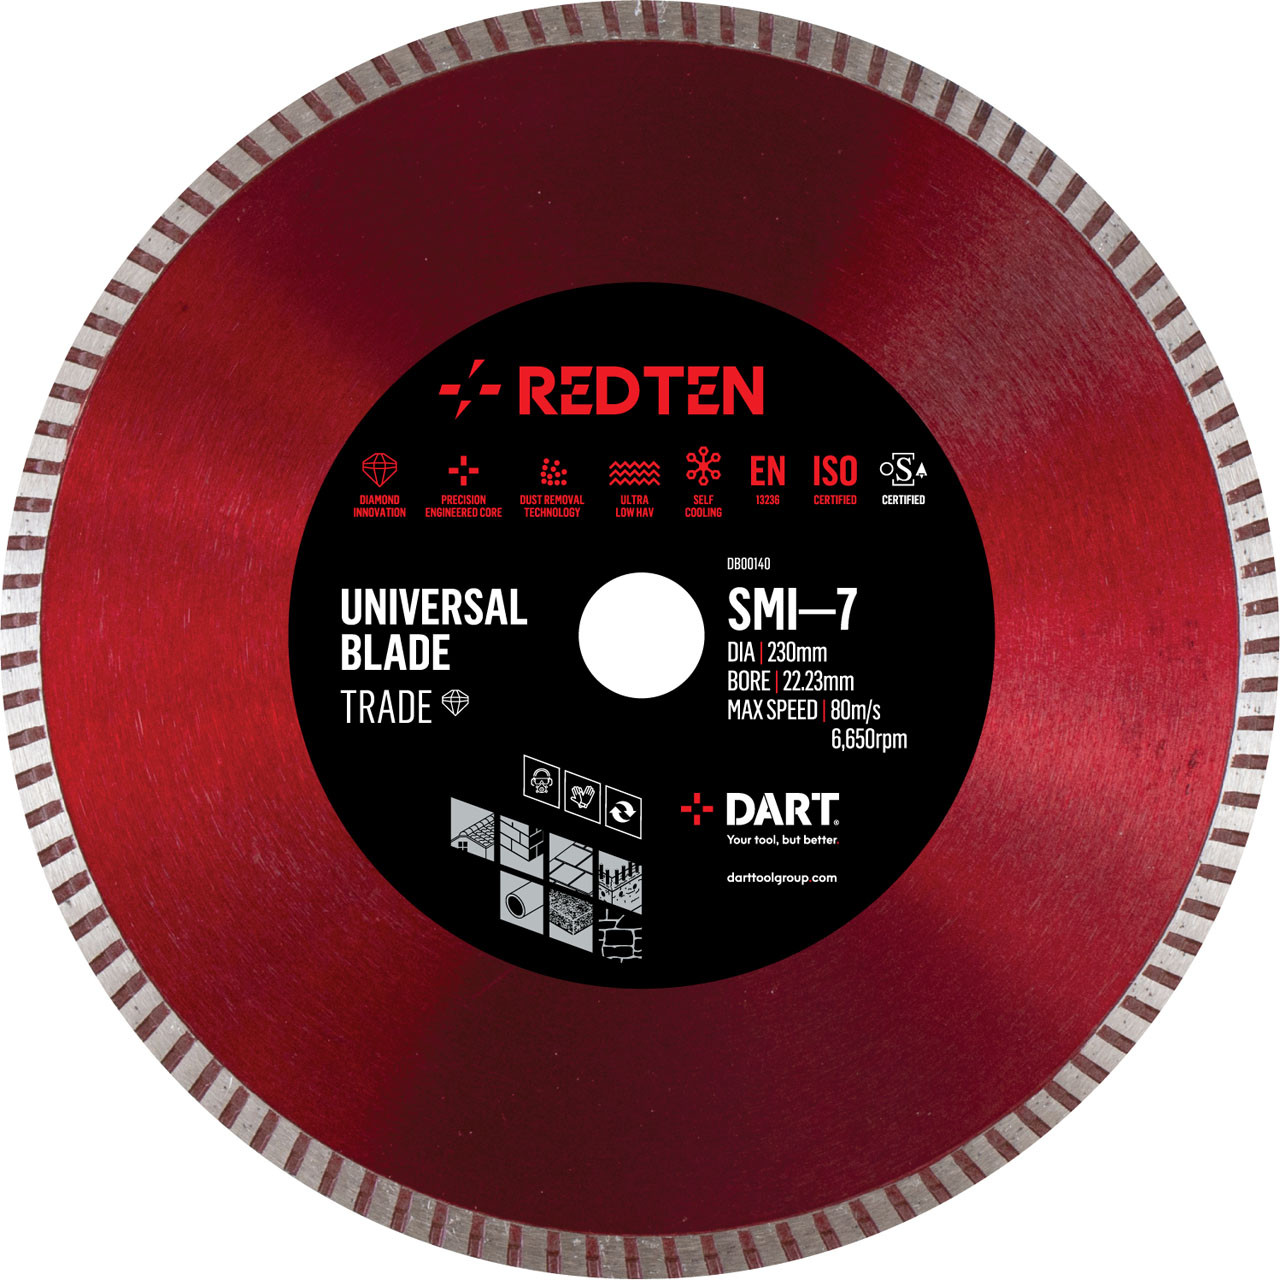 Photograph of Red Ten Smi-7 High Performance Diamond Blade 115mm X 22mm